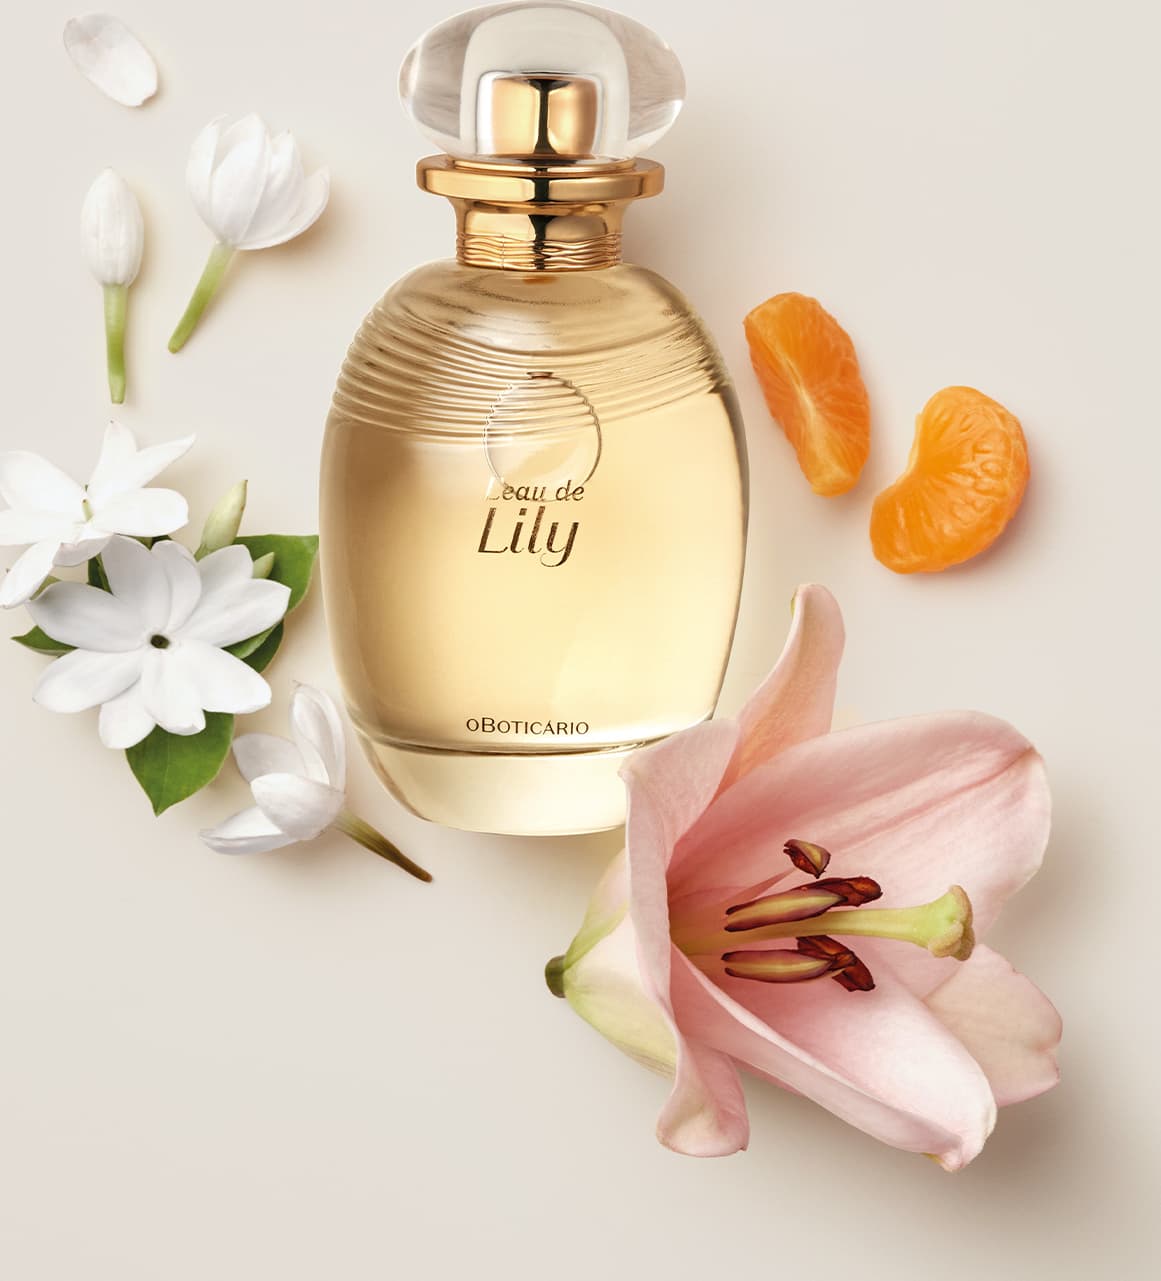 Perfume L eau de Lily Soleil 75ml O boticario